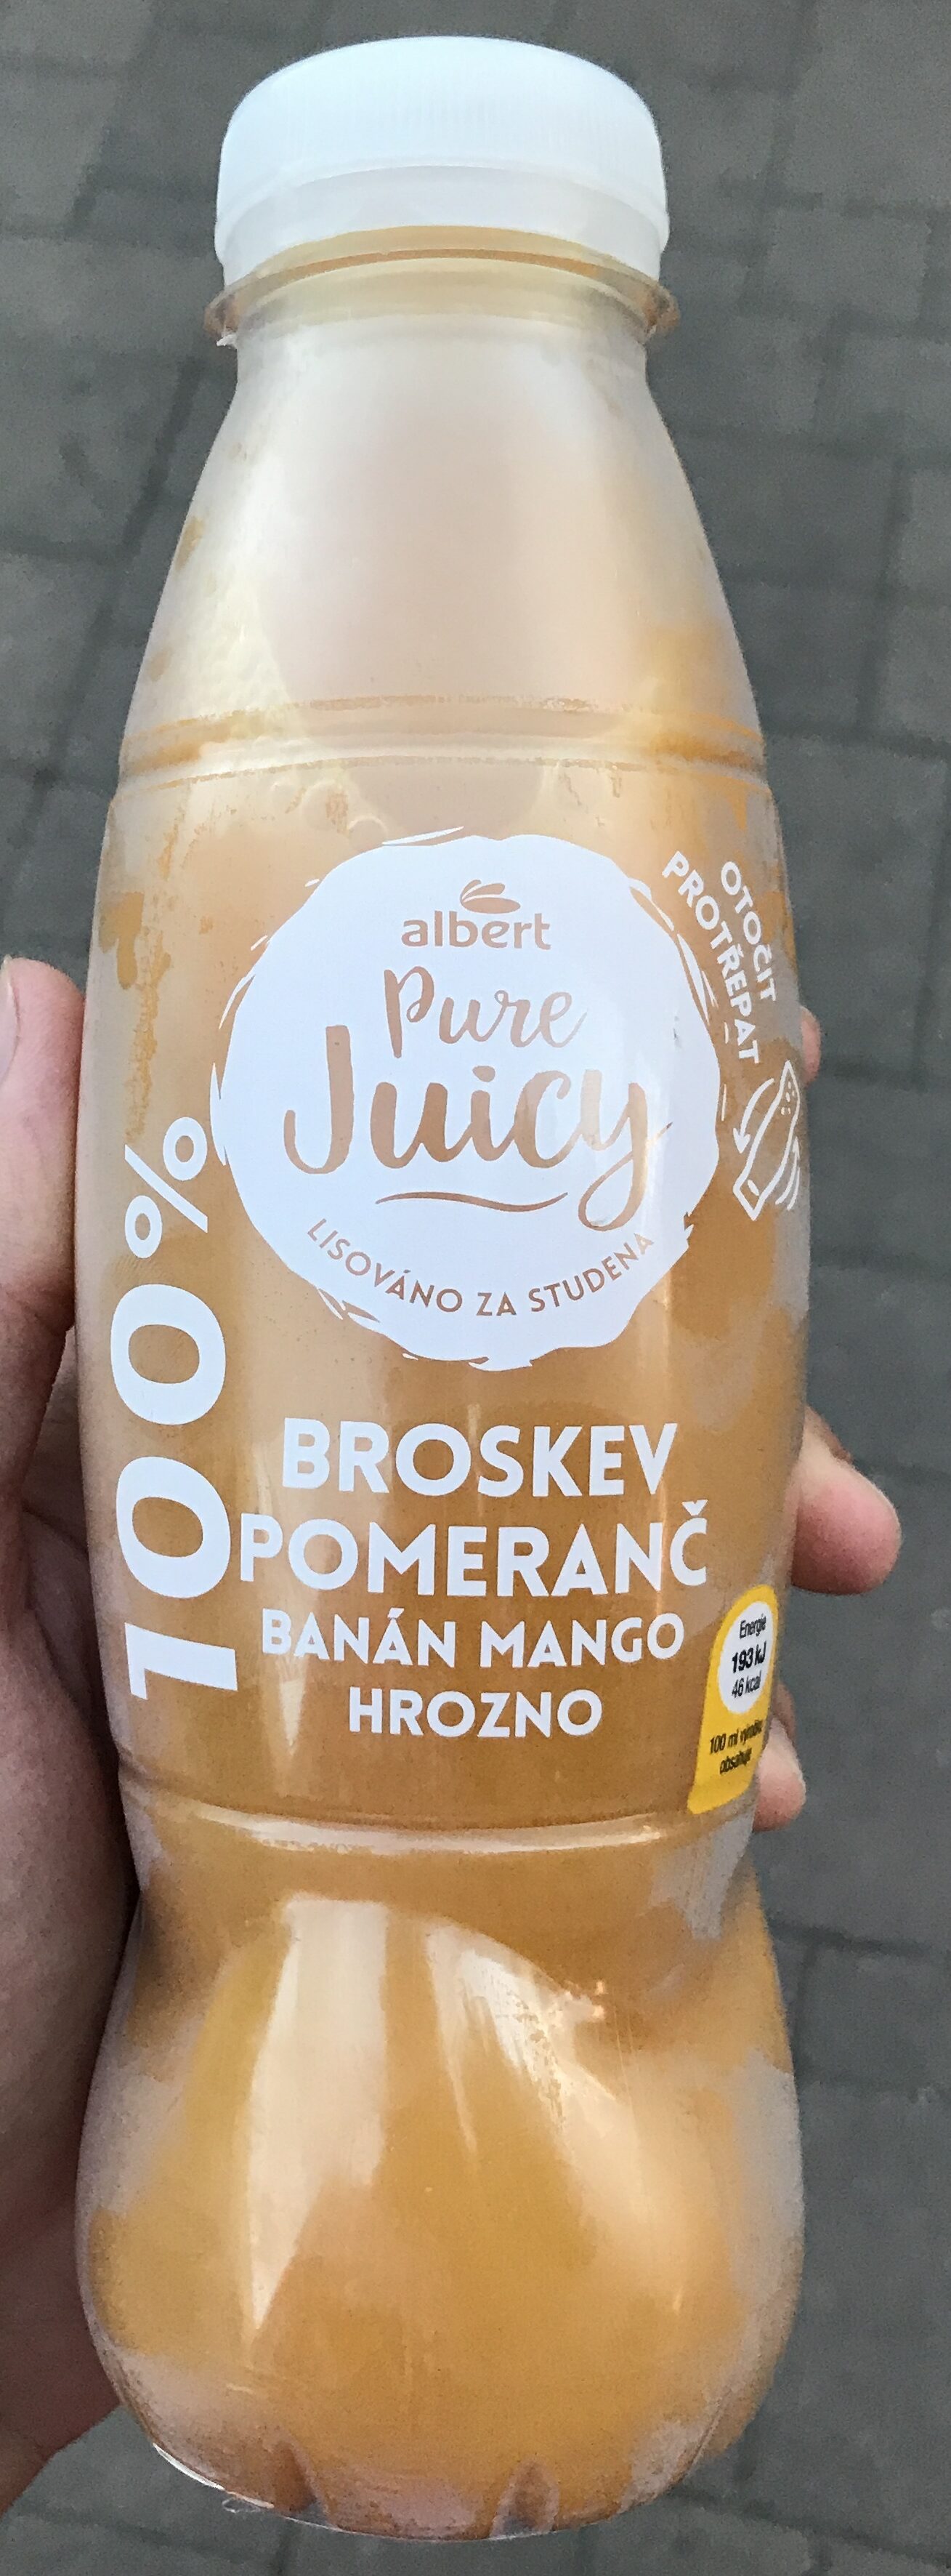 Pure juicy Broskev pomeranč banán mango hrozno - Product - cs